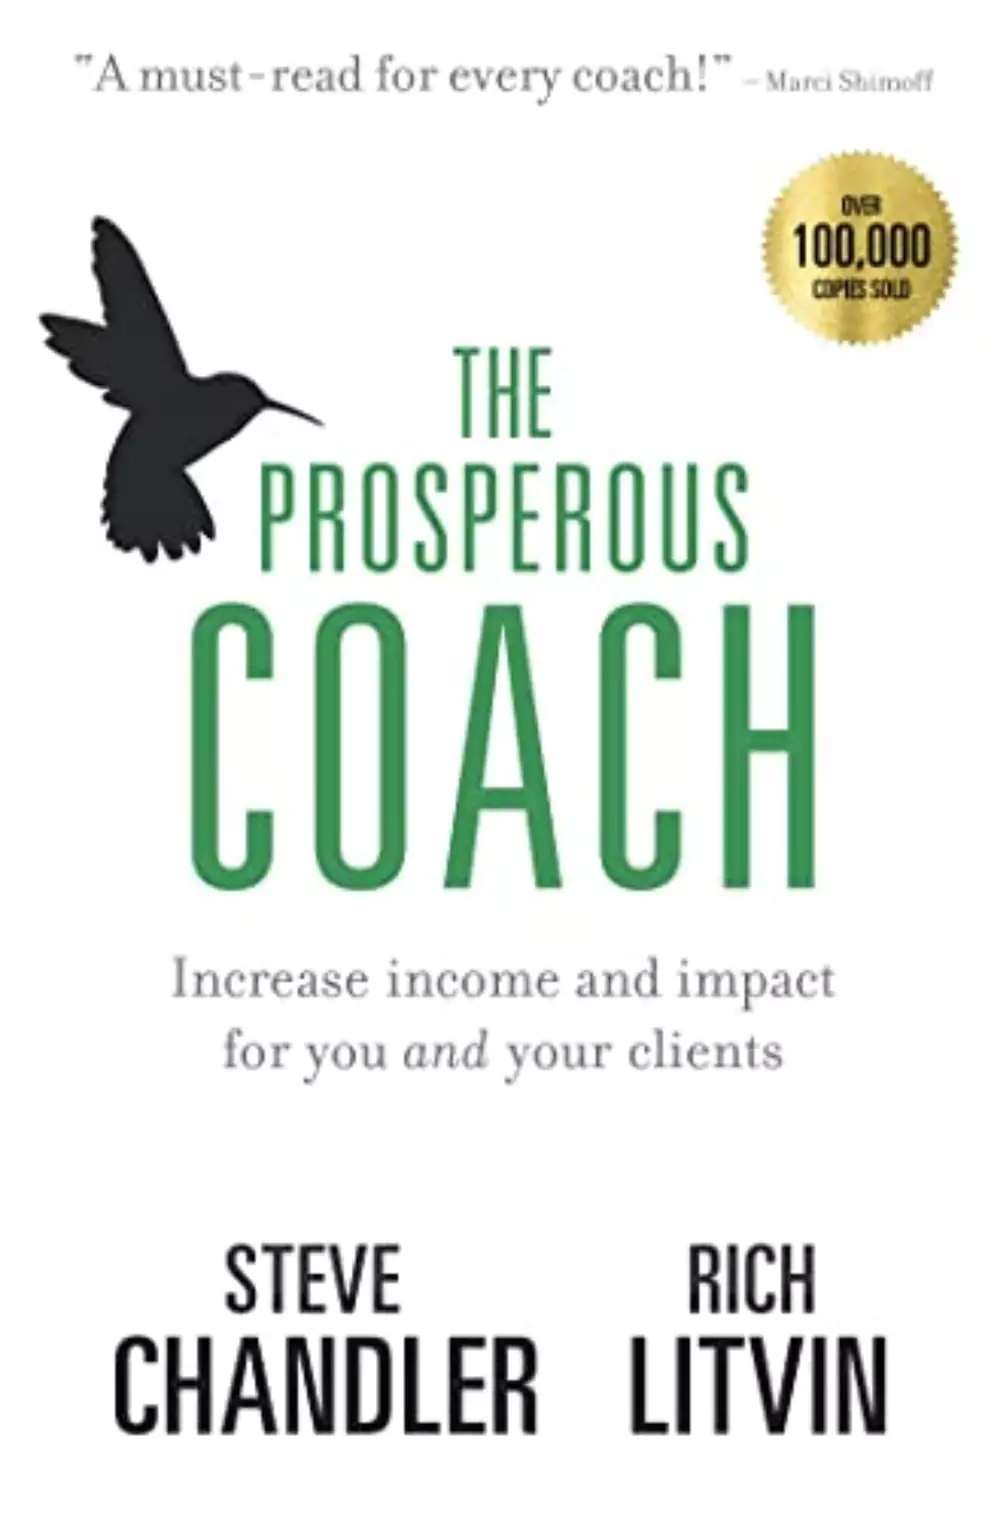 The Prosperous Coach | Steve Chandler & Rich Litvin